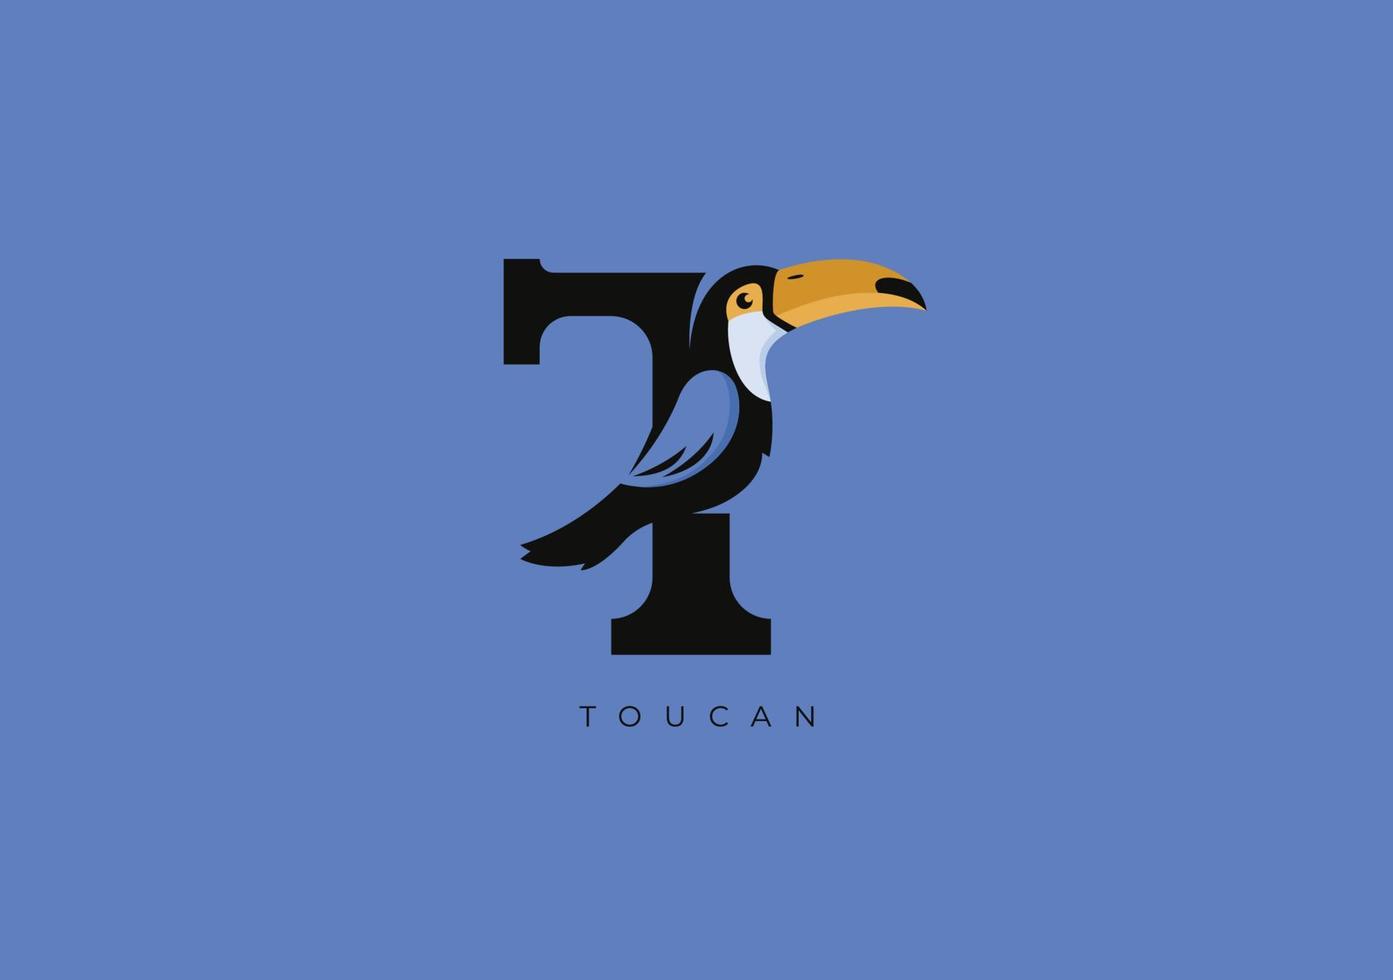 tucano t monogramma, vettore logo